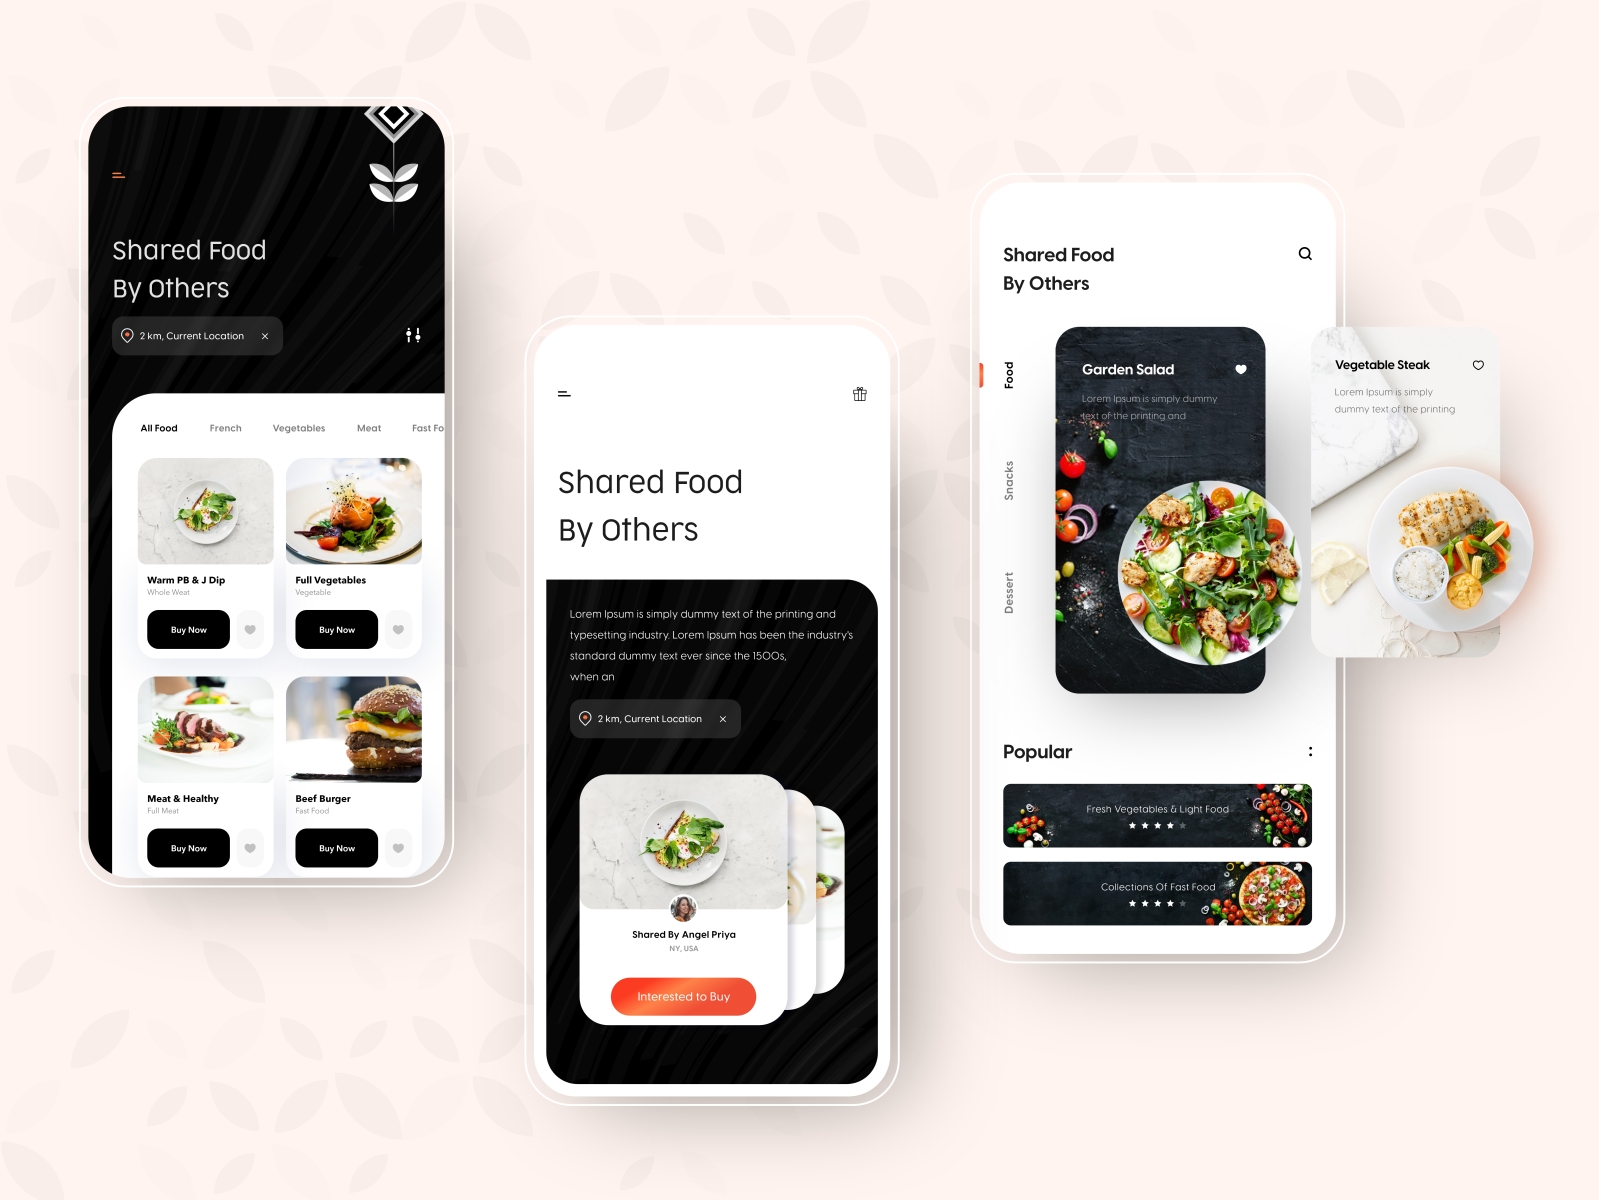 Share Food | Food Sharing Community App UI/UX by Shahriar Khan 🤘 on ...